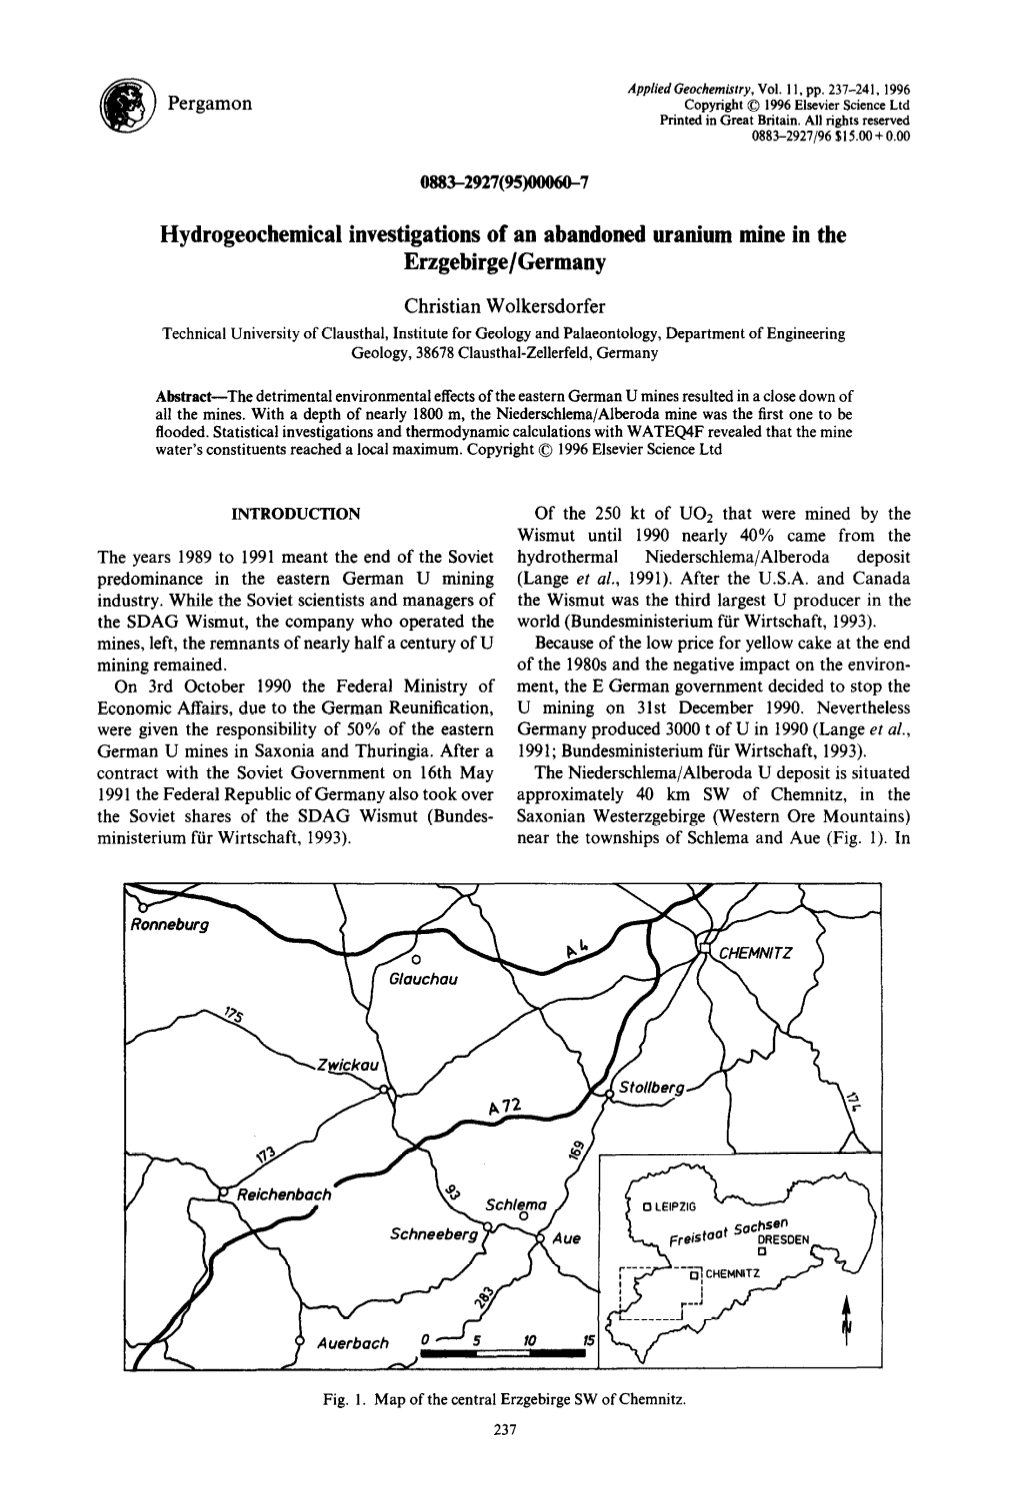 Hydrogeochemical Investigations of an Abandoned Uranium Mine in the Erzgebirge/Germany